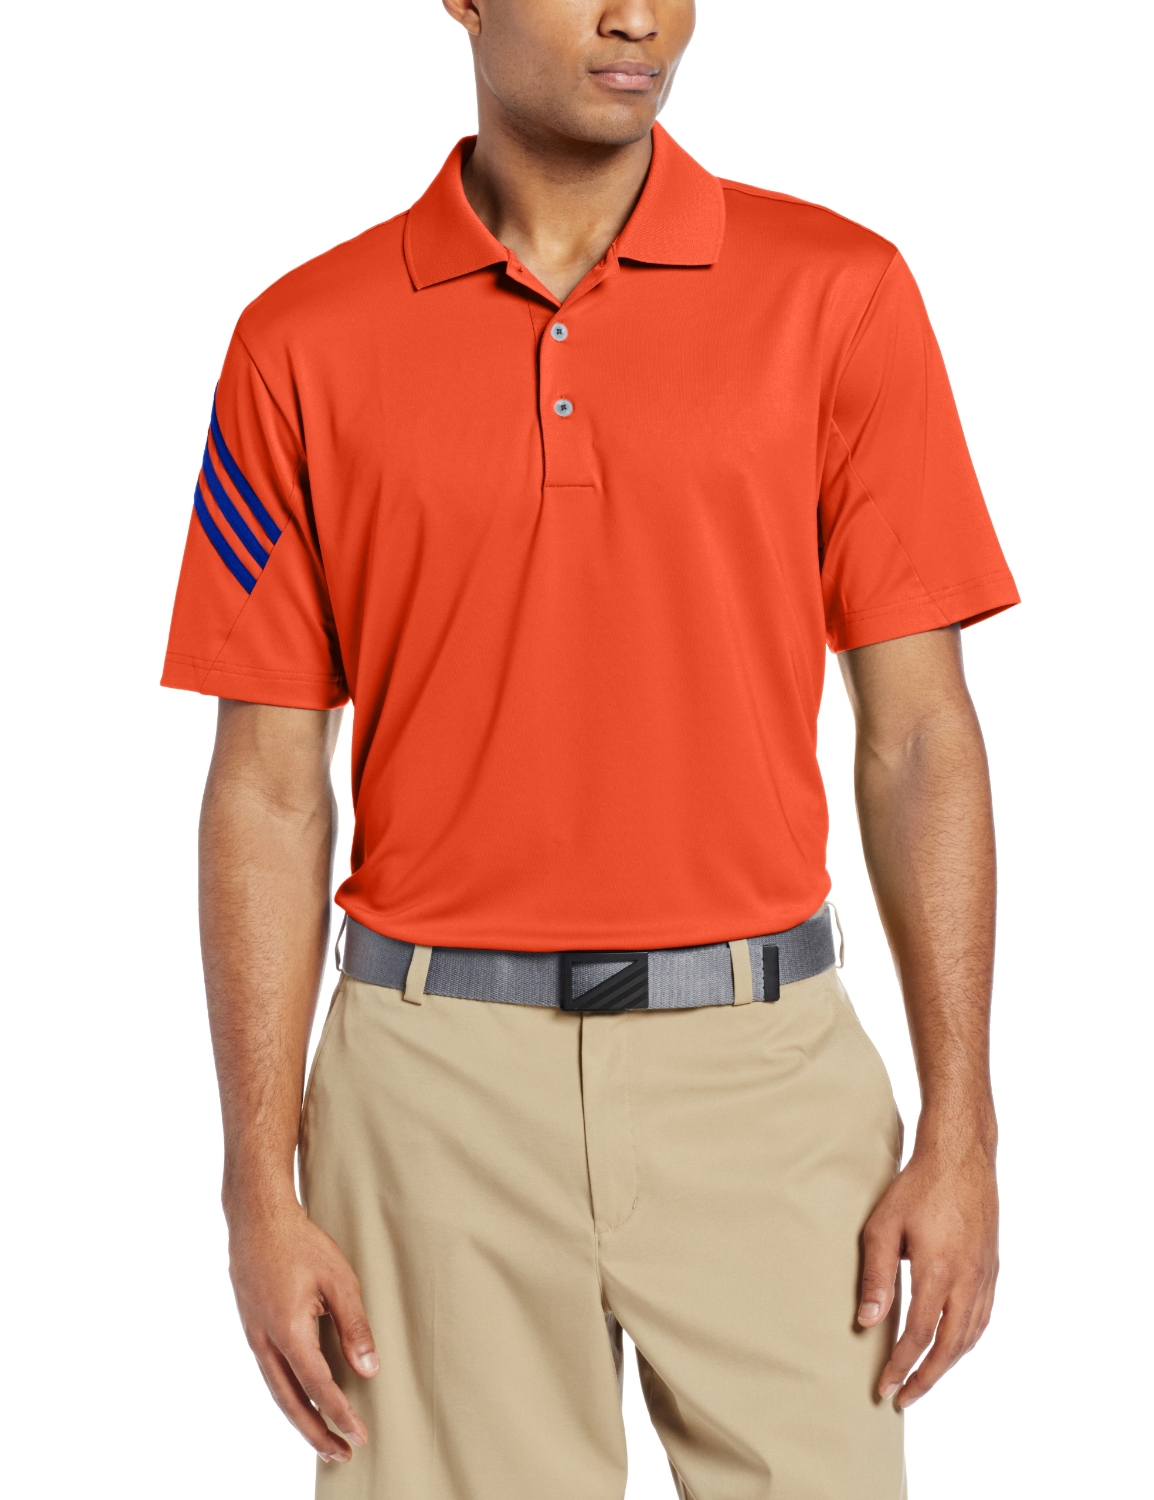 Adidas Puremotion Climacool 3 Stripes Sleeve Golf Polo Shirts